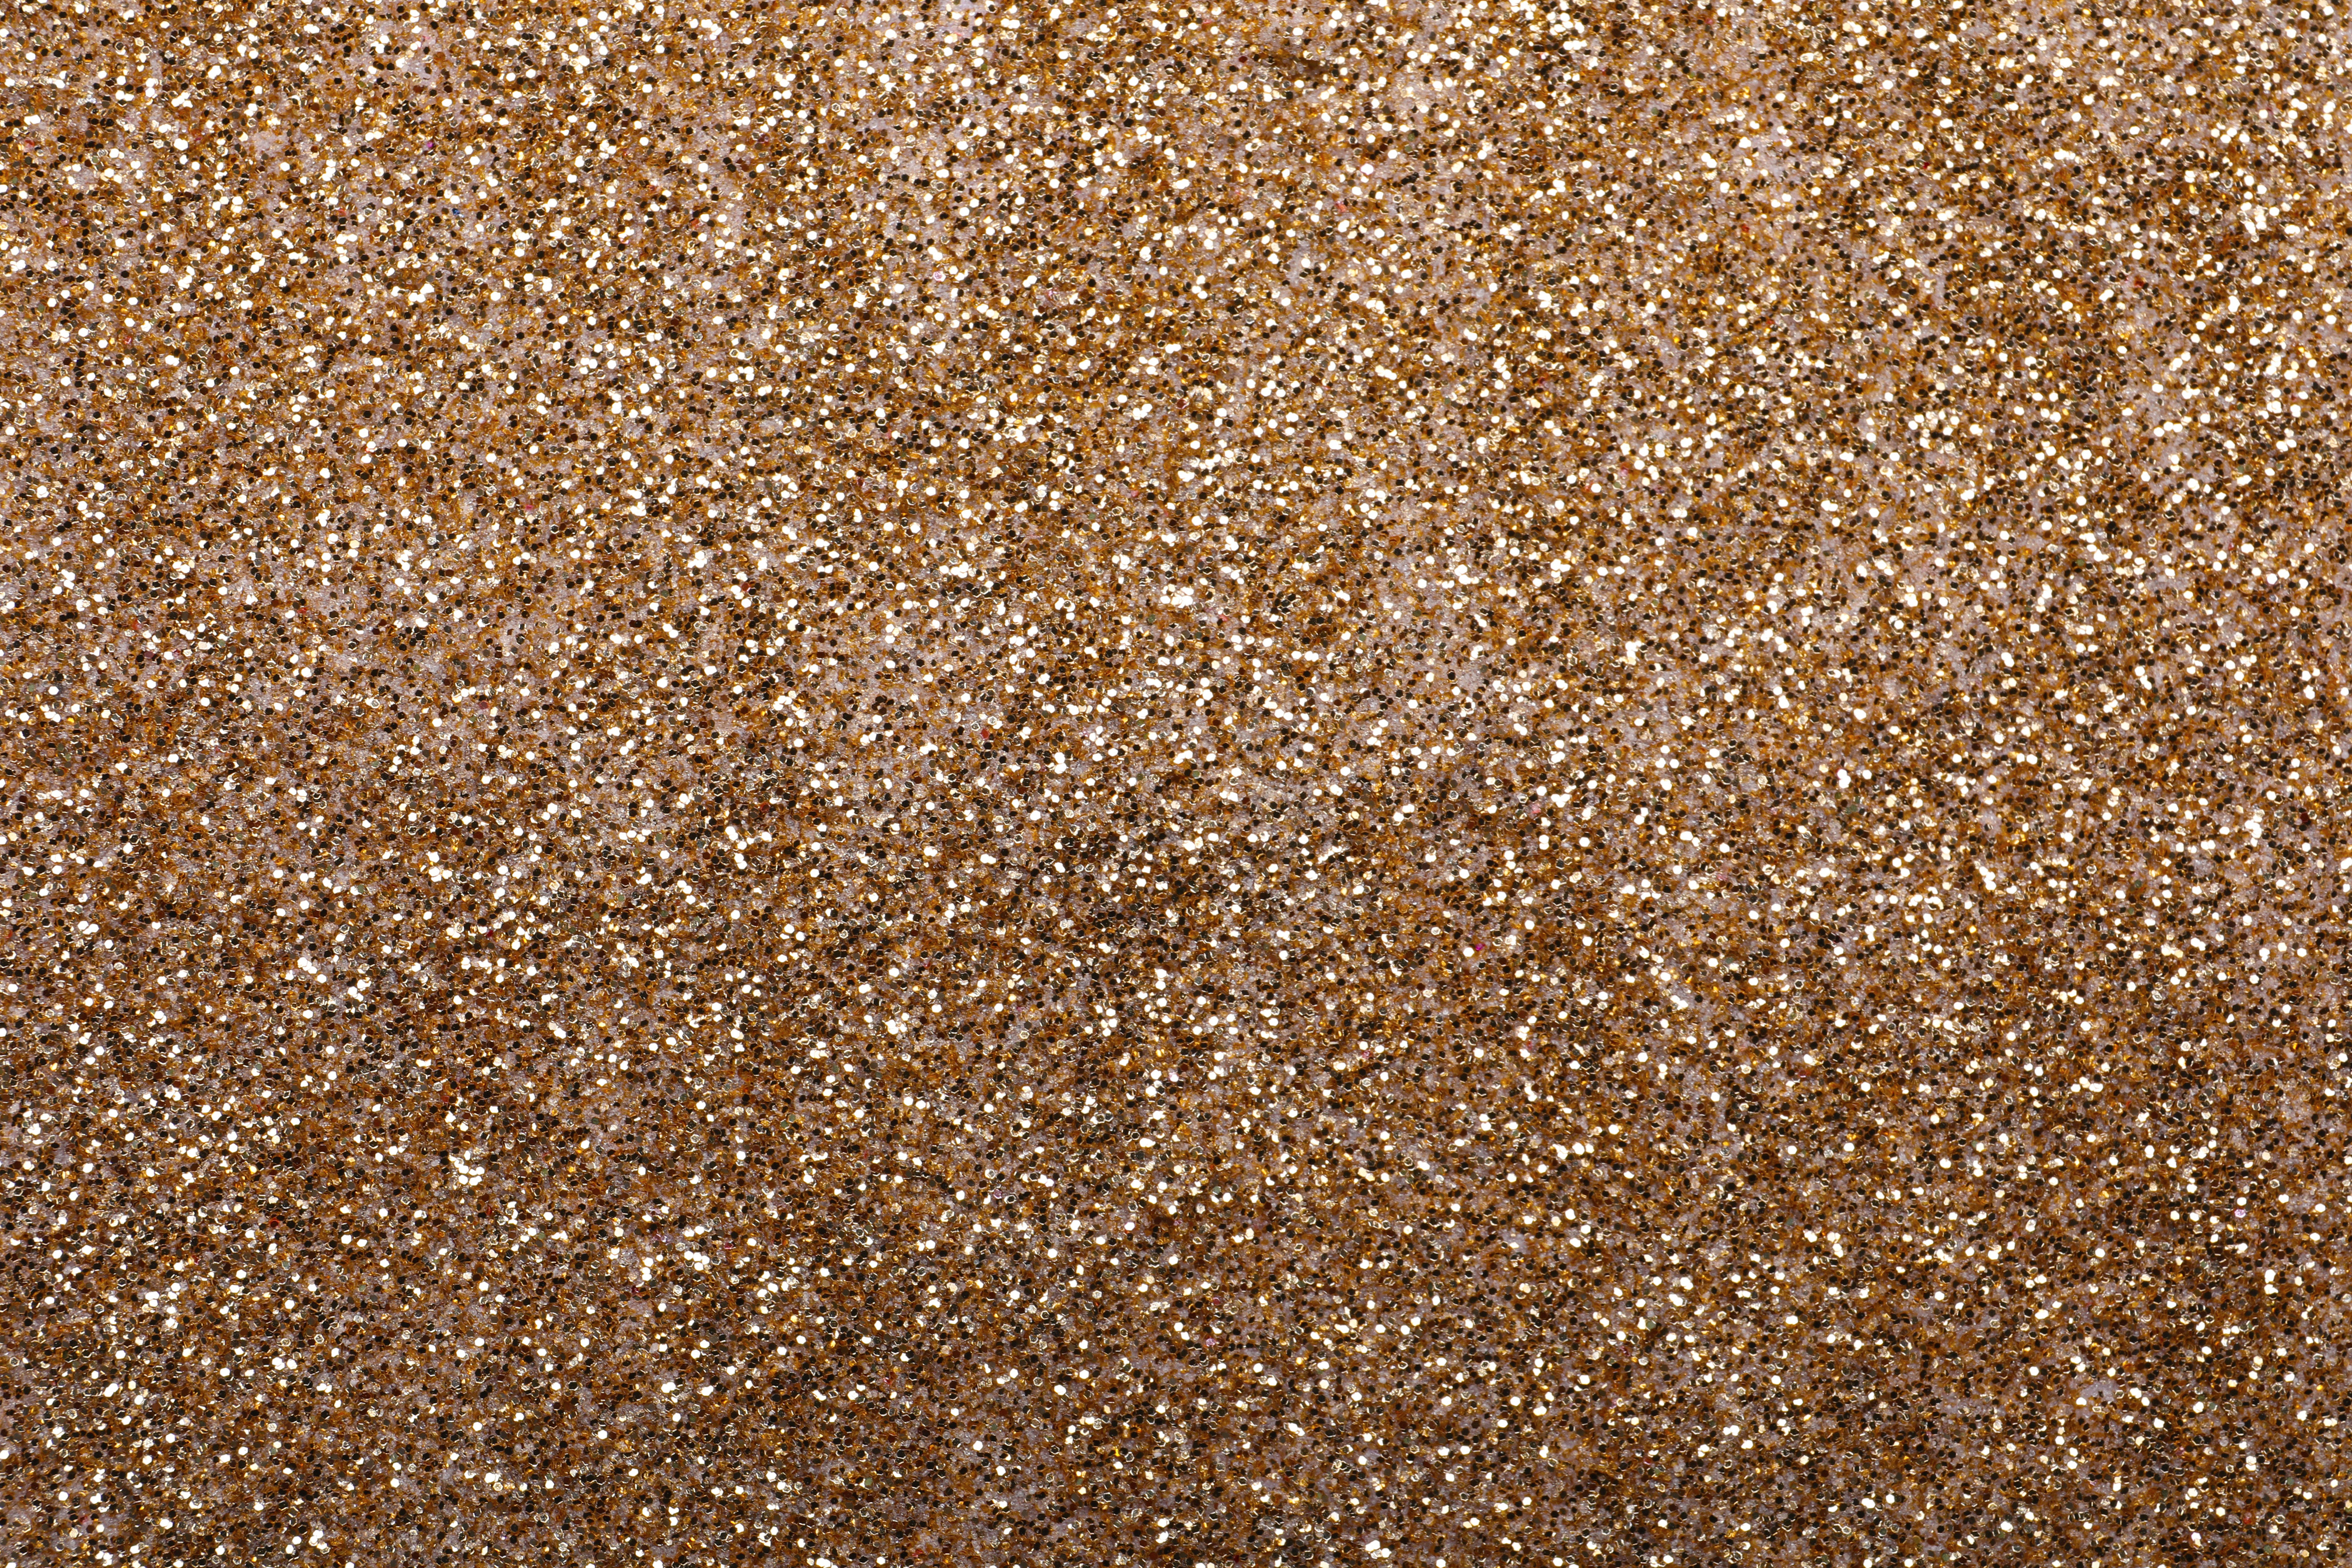 Shiny Light Brown Glitter as Background, Closeup